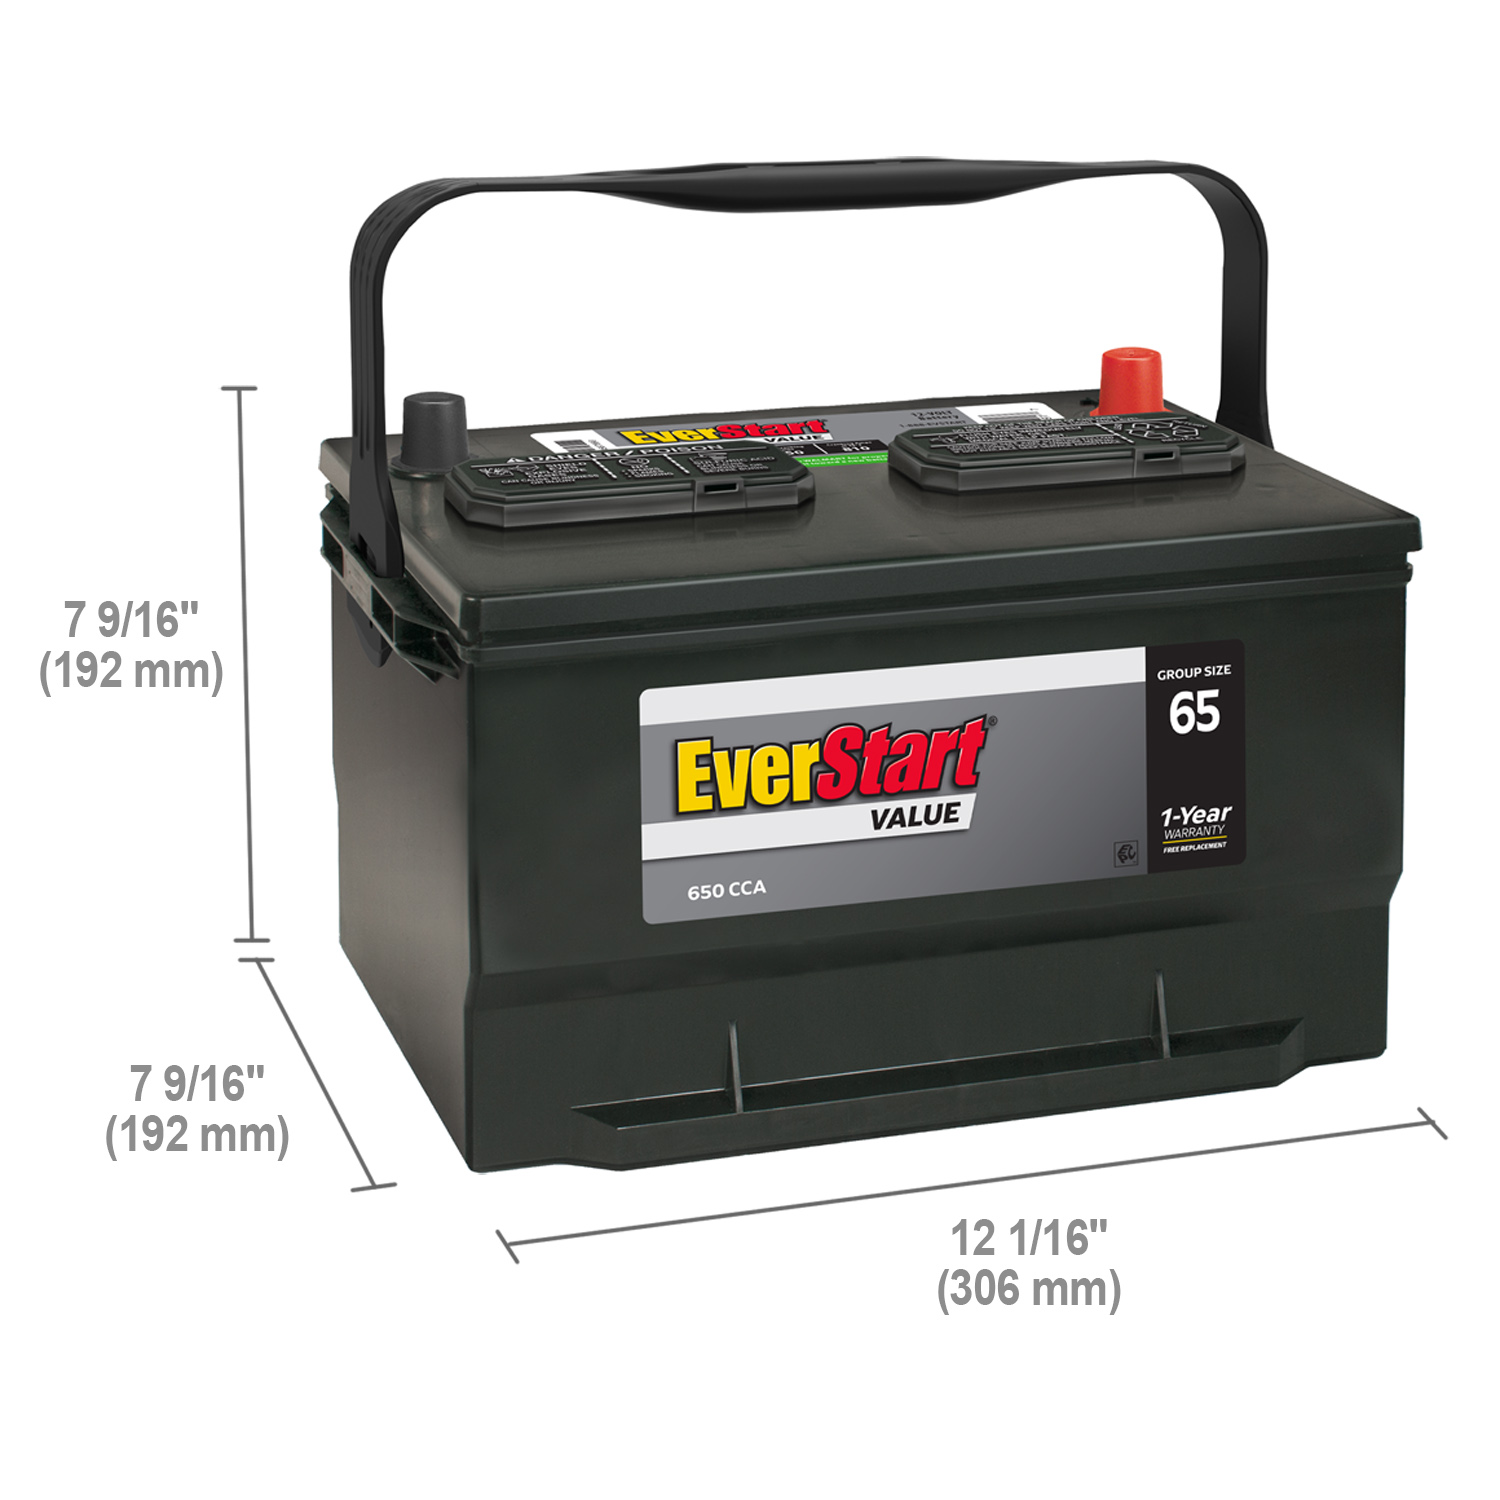 EverStart Value Lead Acid Automotive Battery, Group Size 65 12 Volts, 650 CCA - image 2 of 7